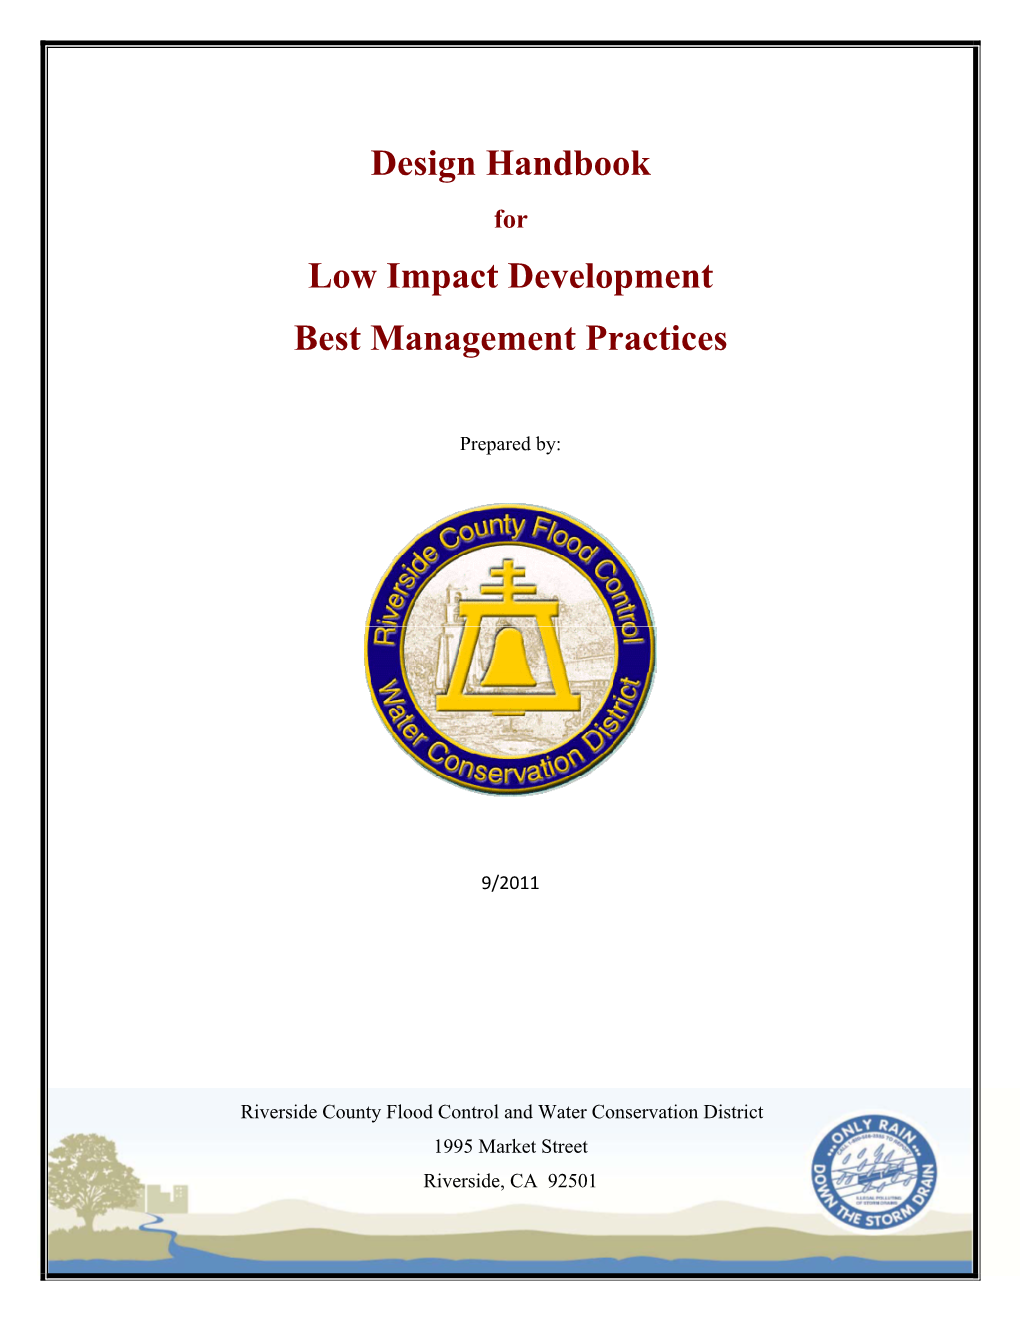 Design Handbook Low Impact Development Best Management